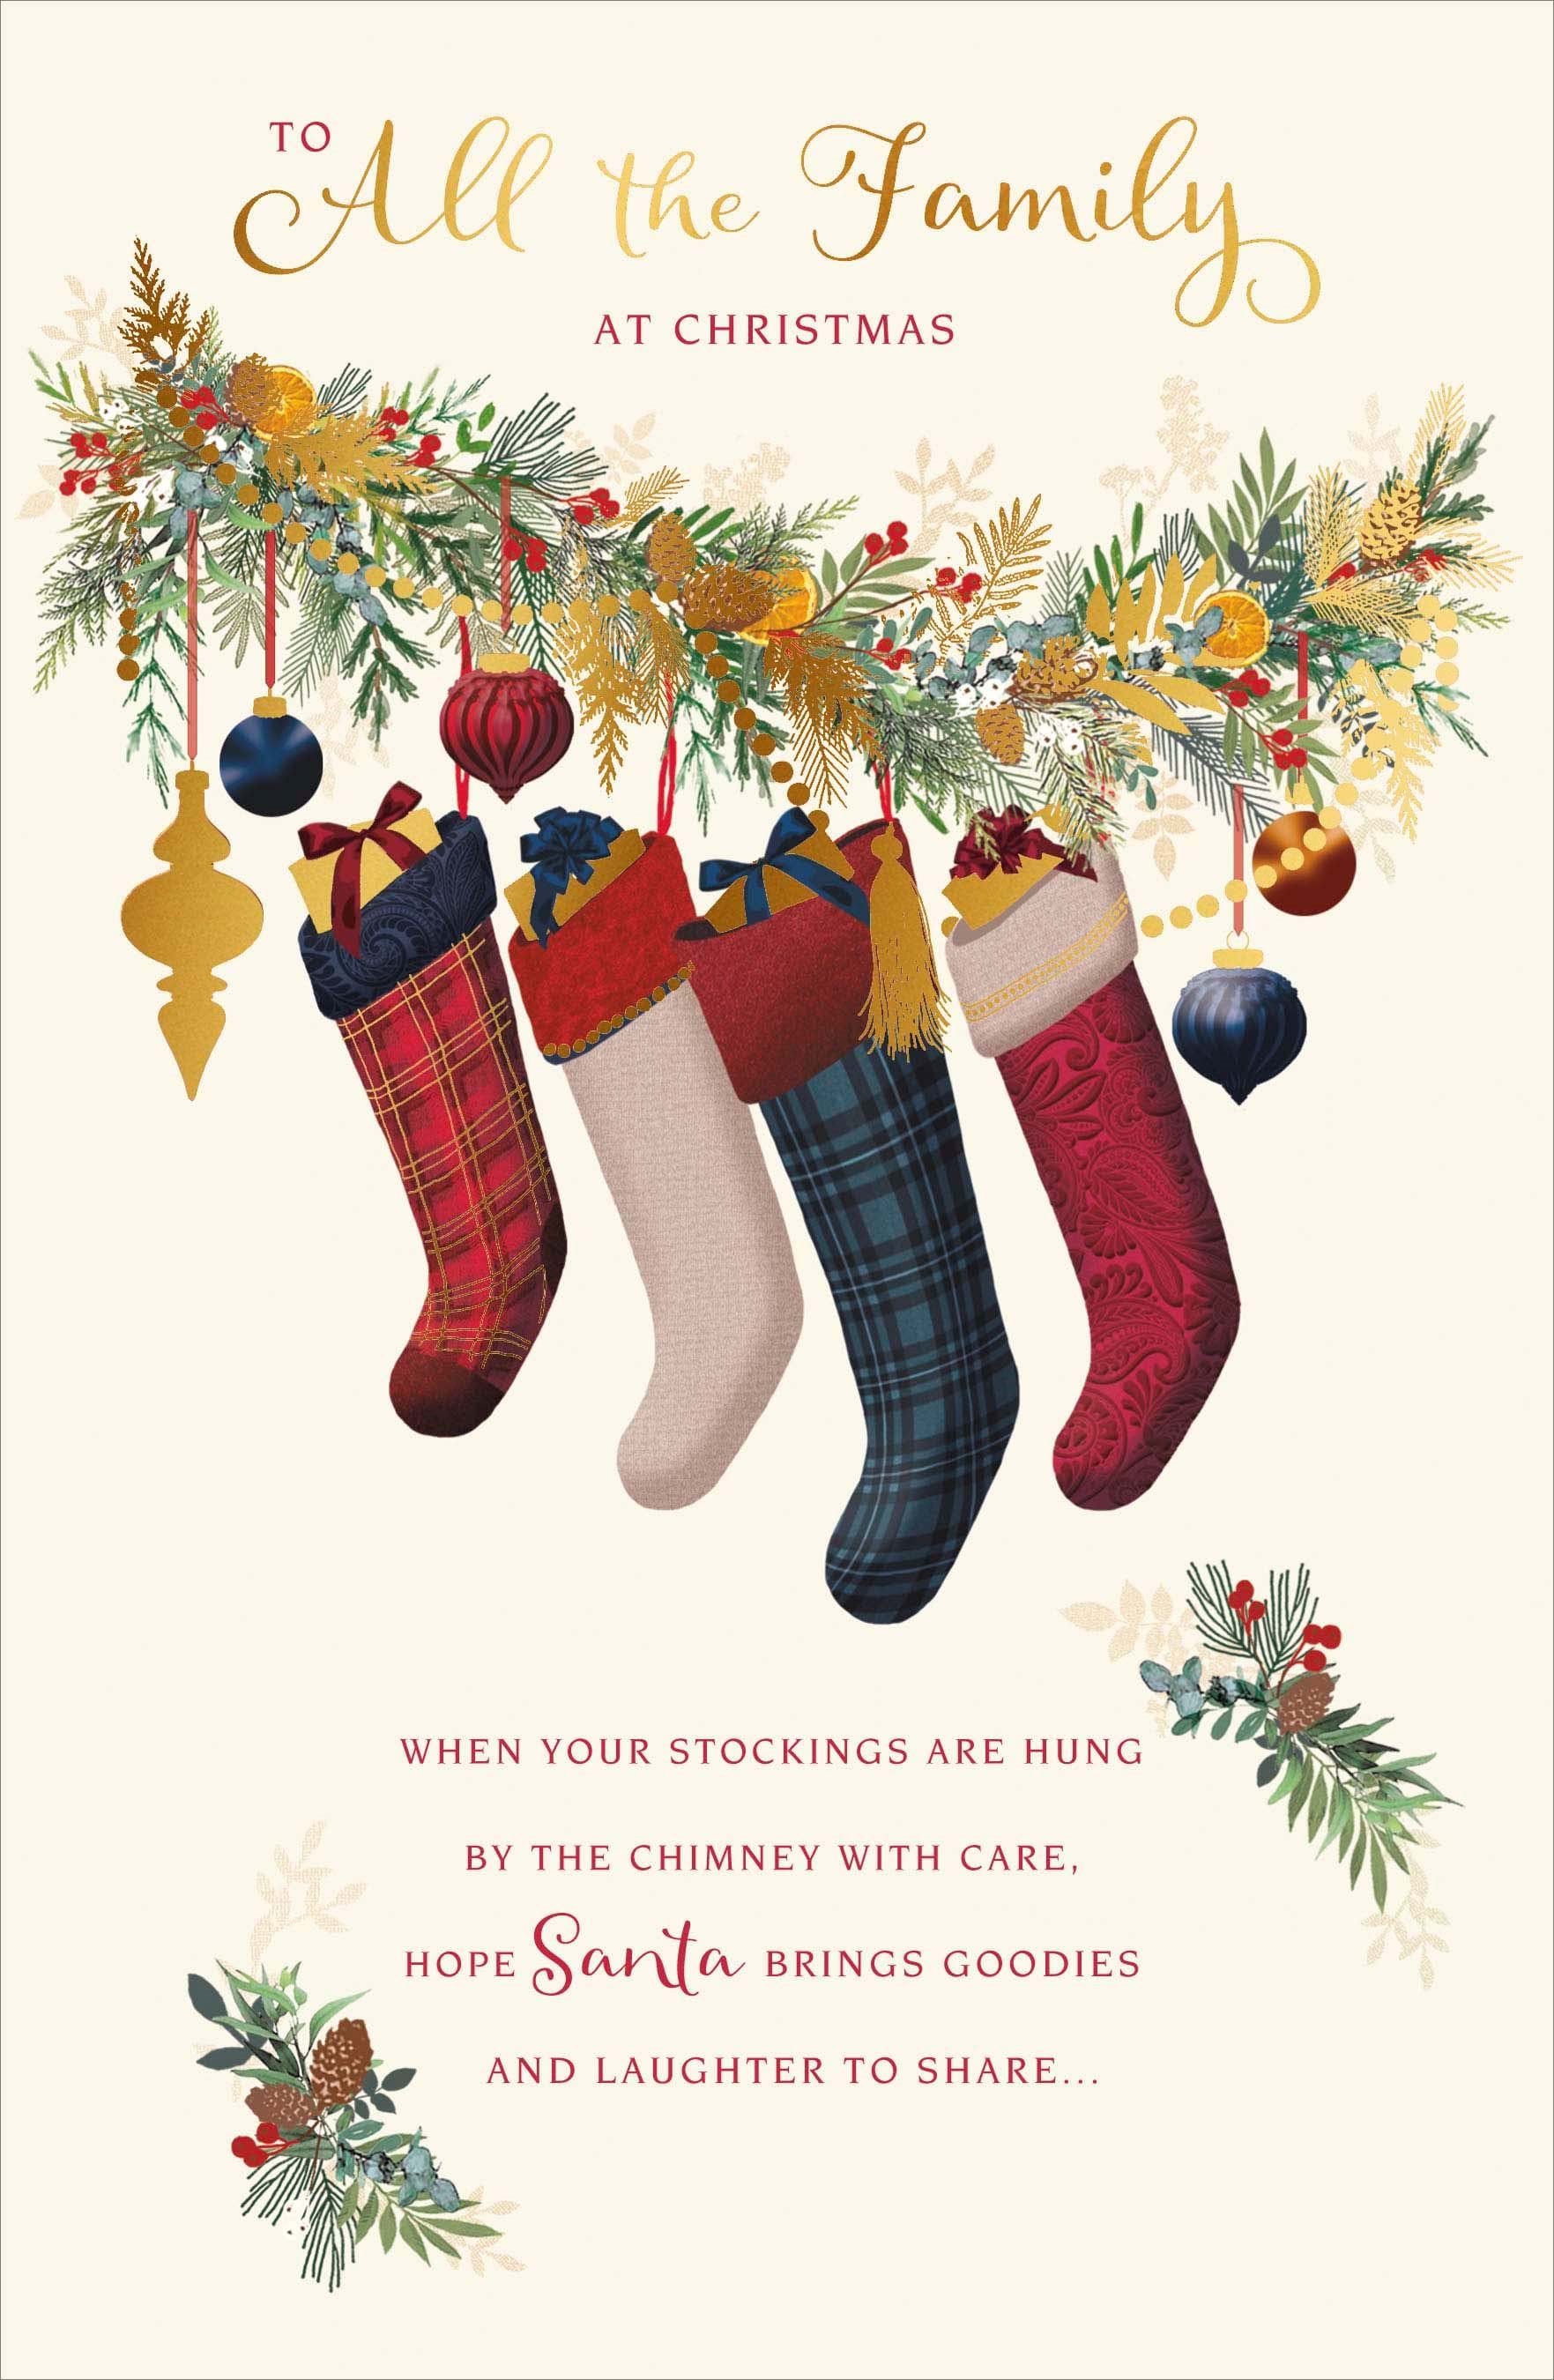 Stockings Family Christmas Card